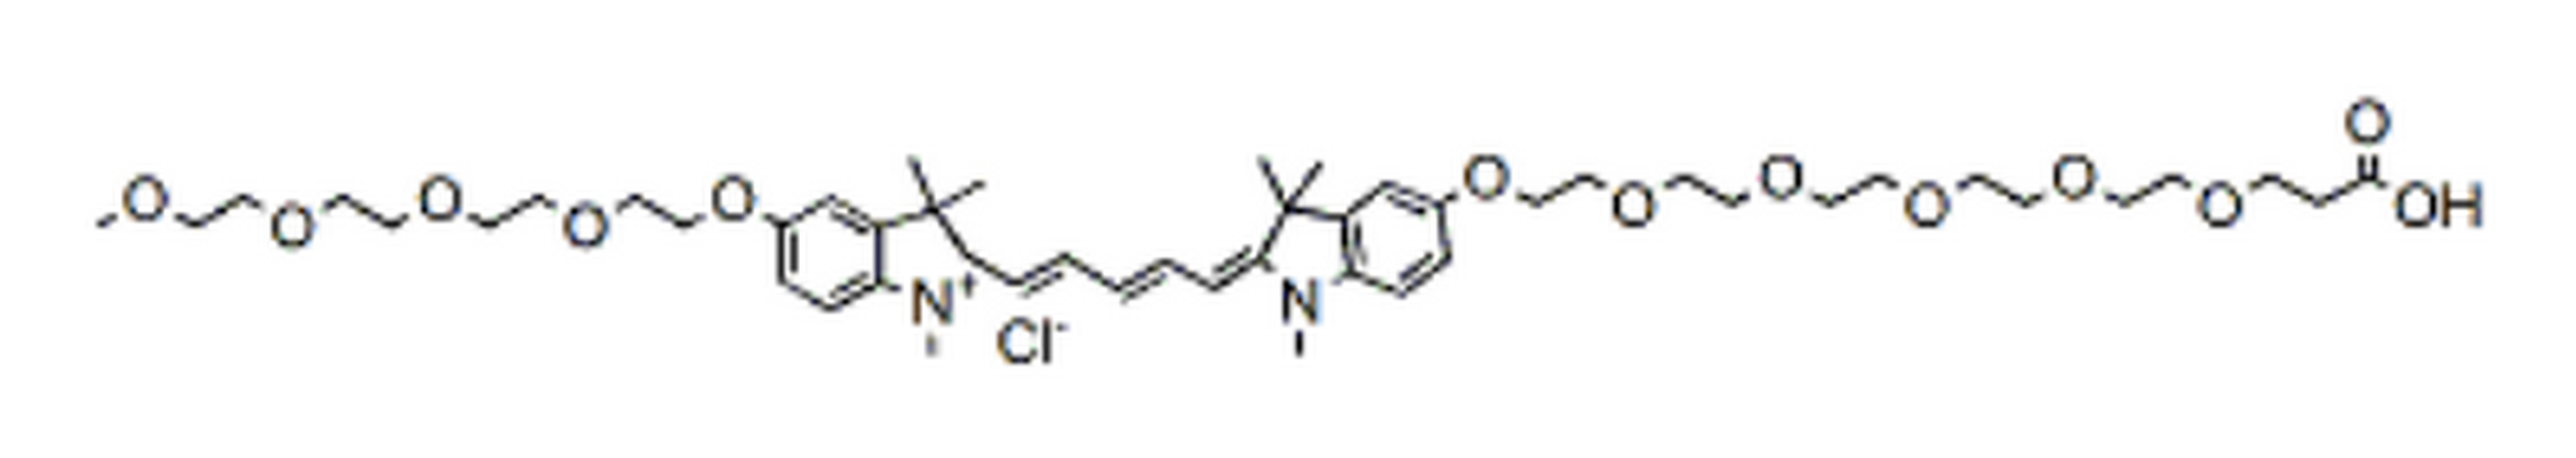 N-methyl-N'-methyl-O-(m-PEG4)-O'-(acid-PEG5)-Cy5